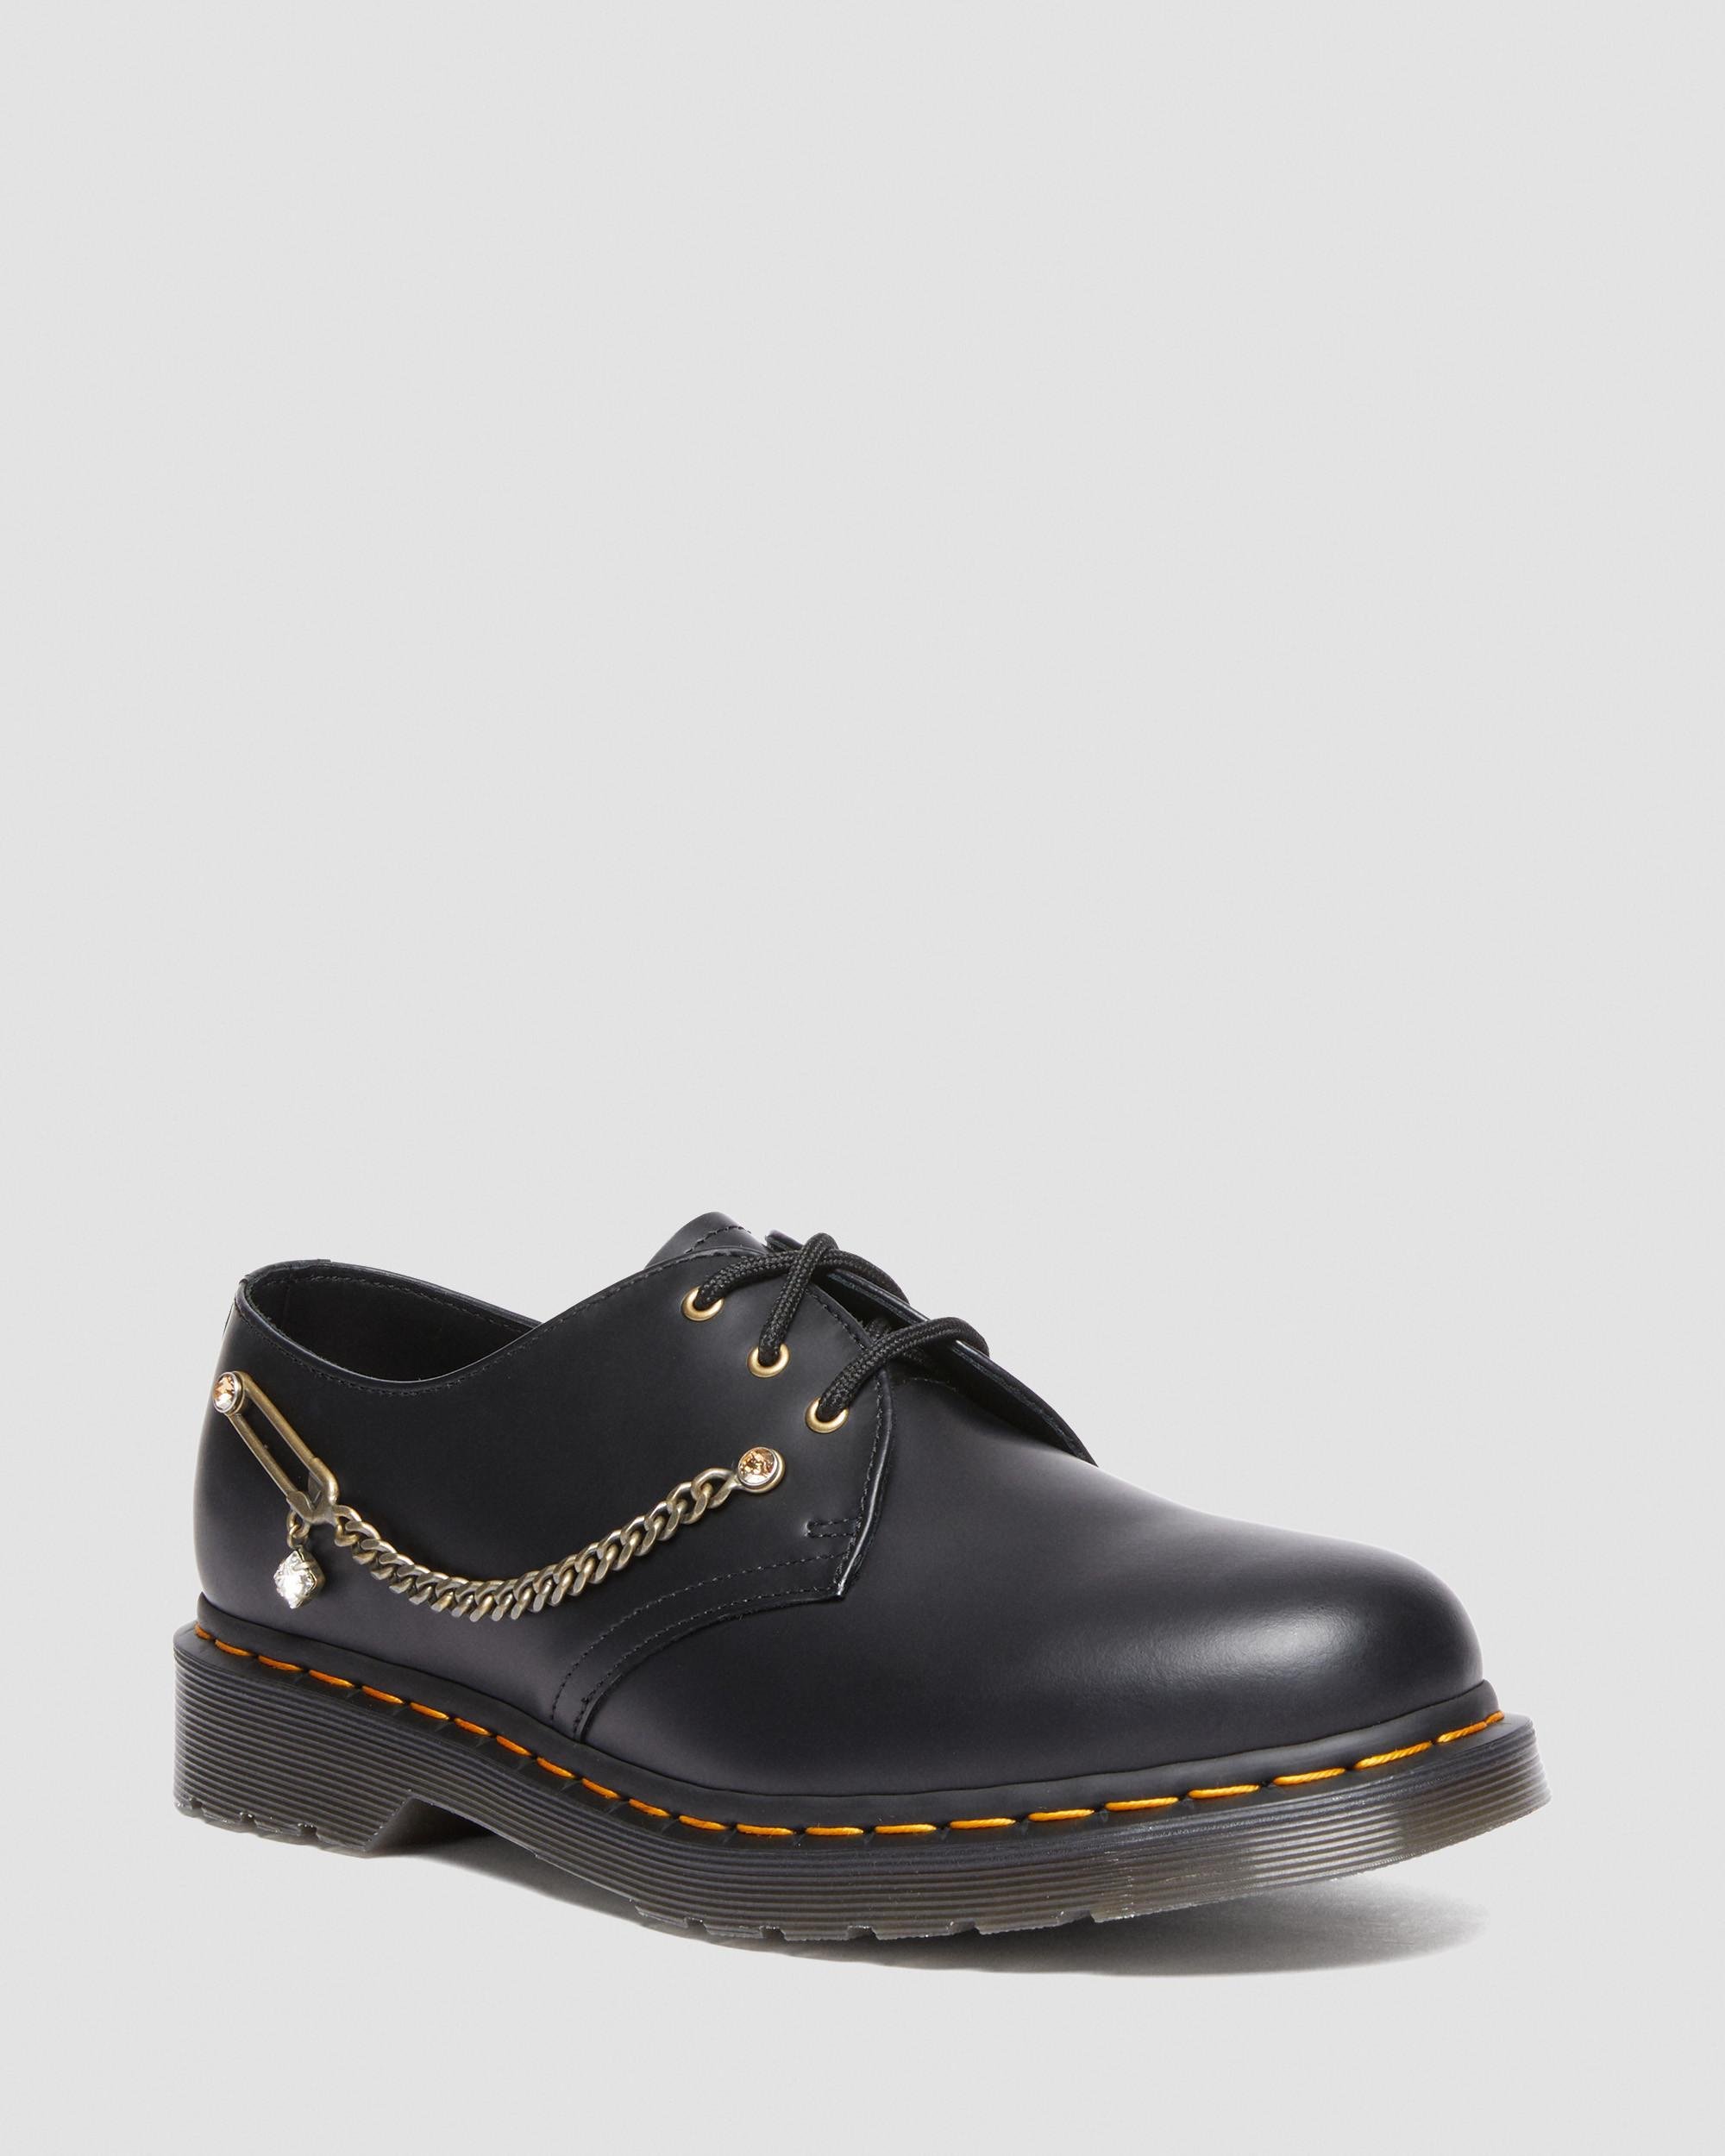 Dr. Martens 1461 Swarovski Leather Oxford Shoes in Black | Lyst